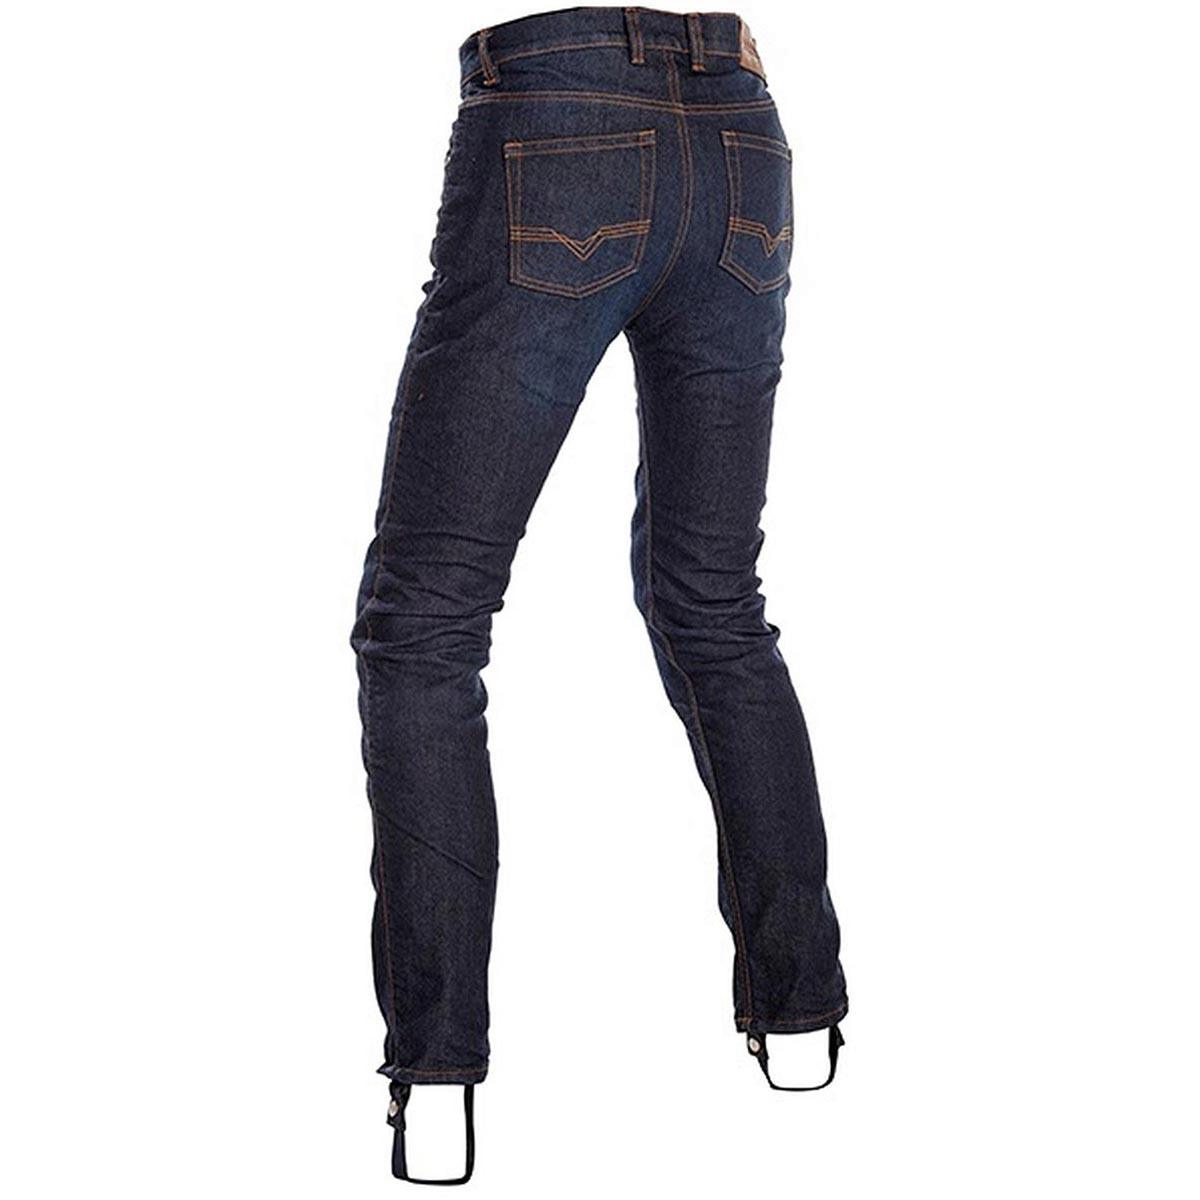 Richa Original Slim Cut Jeans 32in Leg  - Armoured Jeans